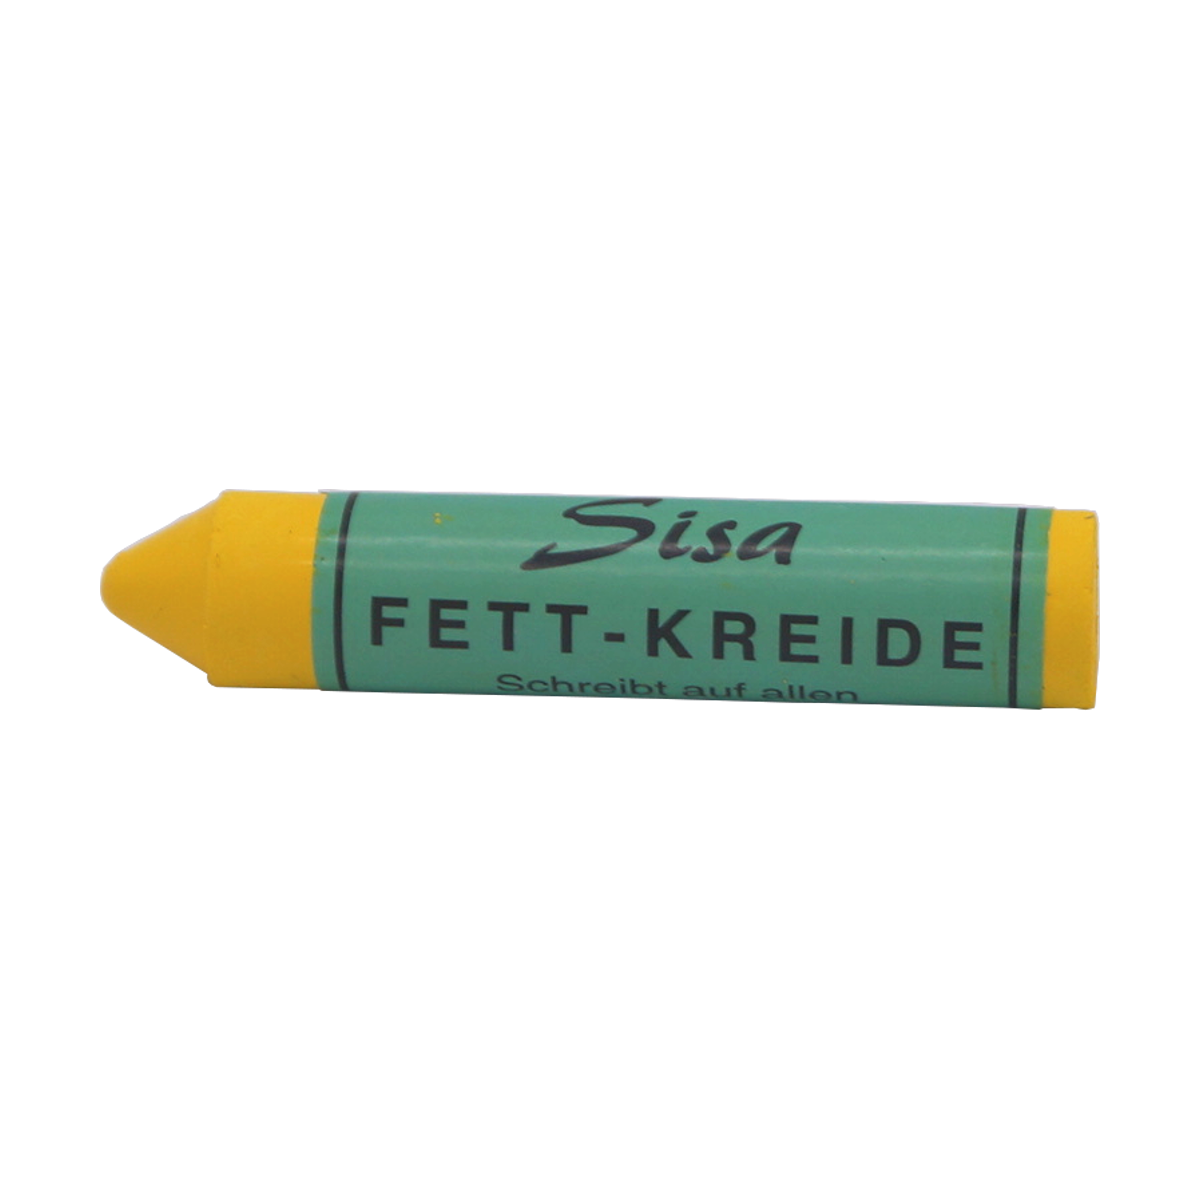 autoteile-koenne - 5x Signierkreide gelb Reifenkreide wasserfest Kreide  Fettkreide Markierstift